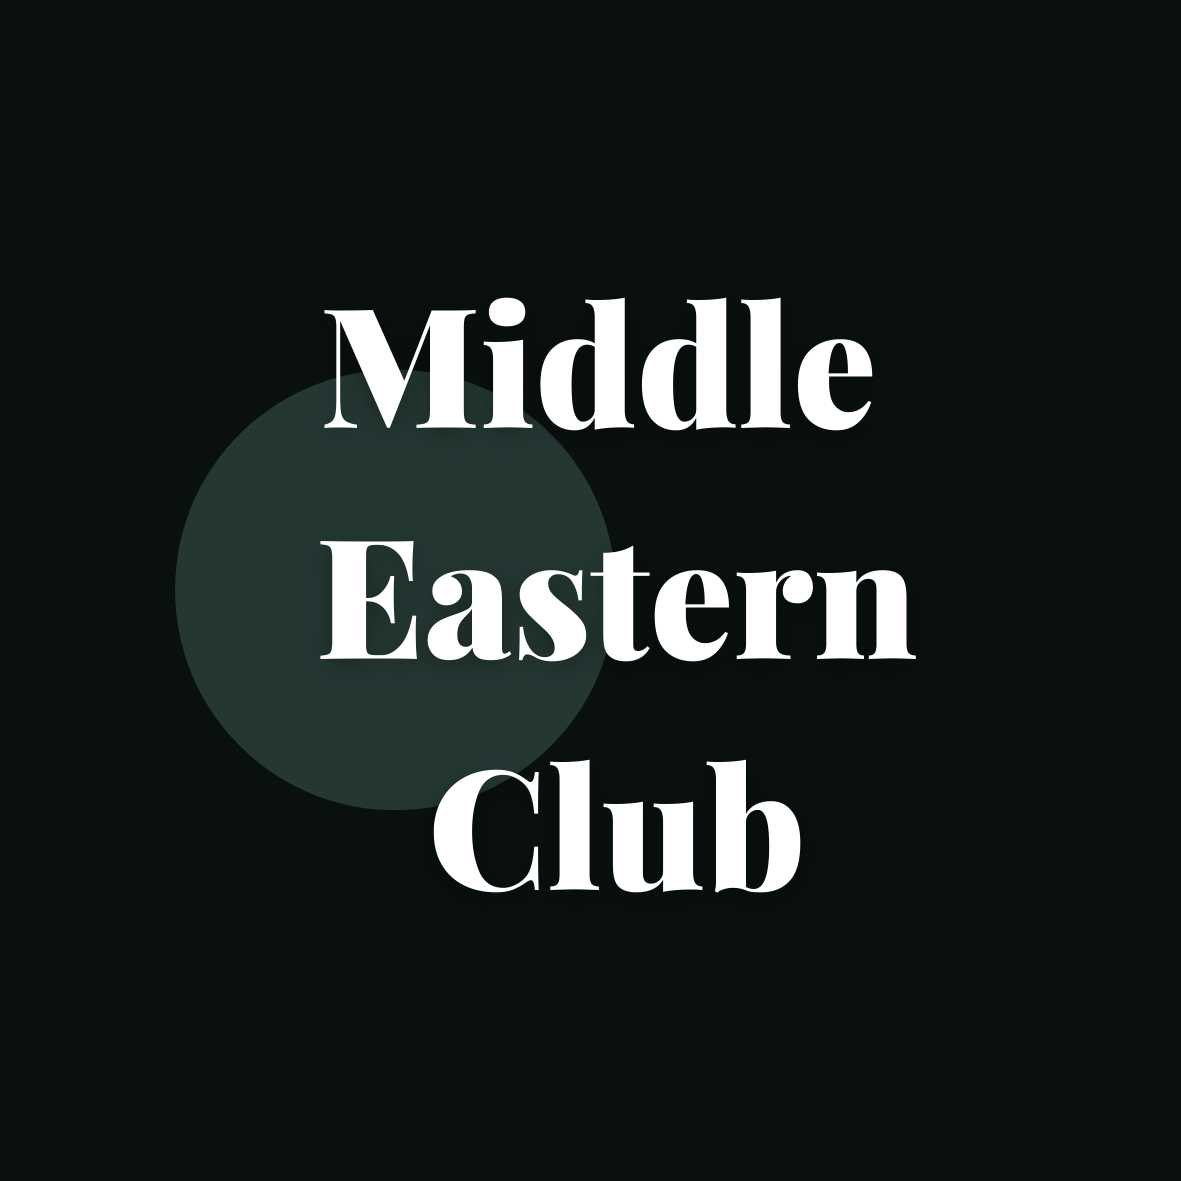 Middle Eastern Club